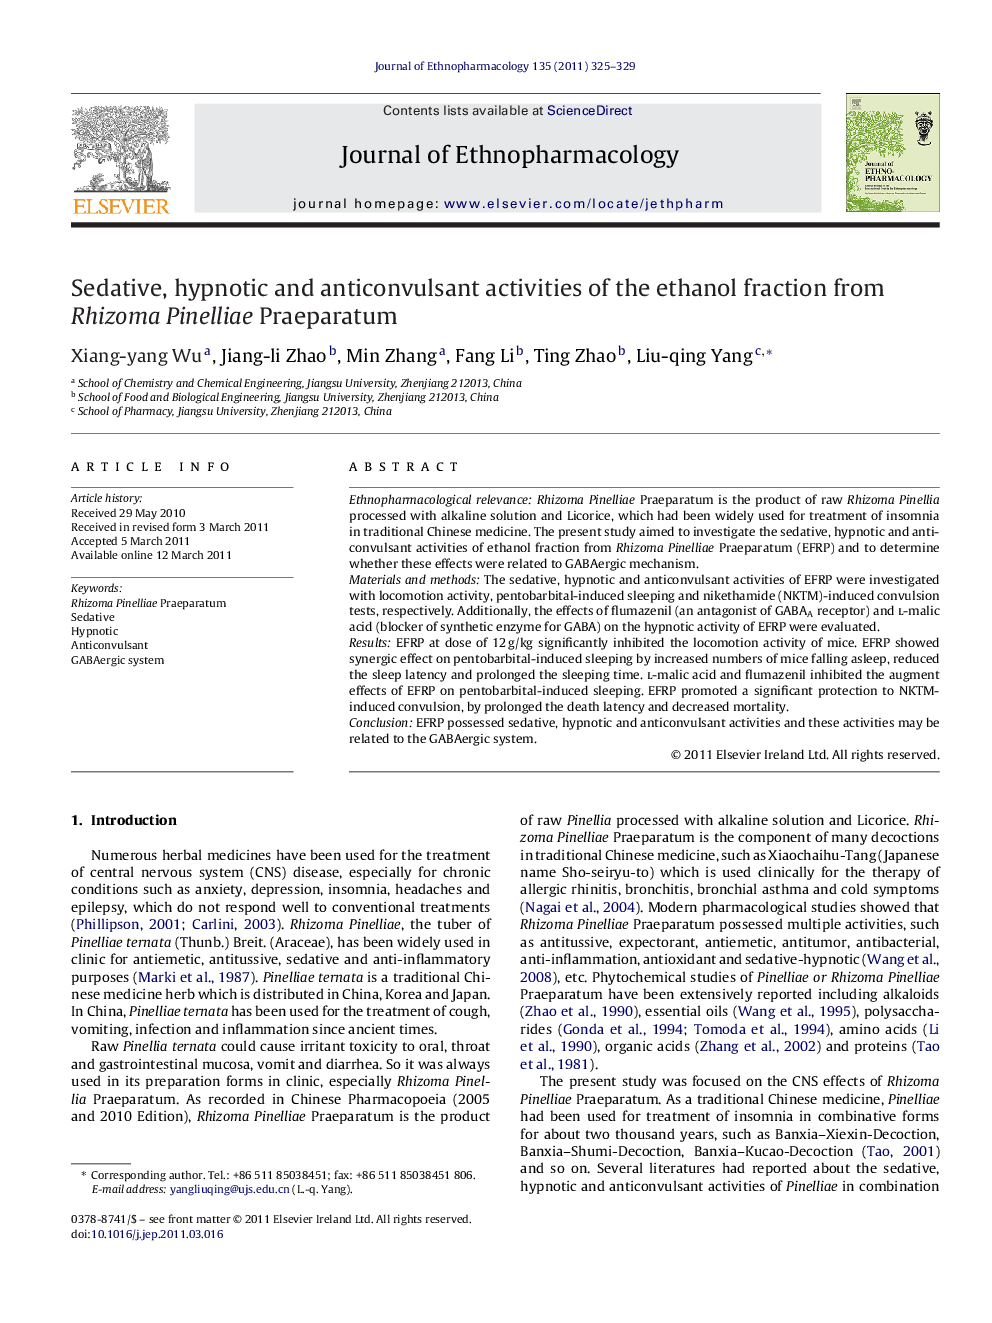 Sedative, hypnotic and anticonvulsant activities of the ethanol fraction from Rhizoma Pinelliae Praeparatum